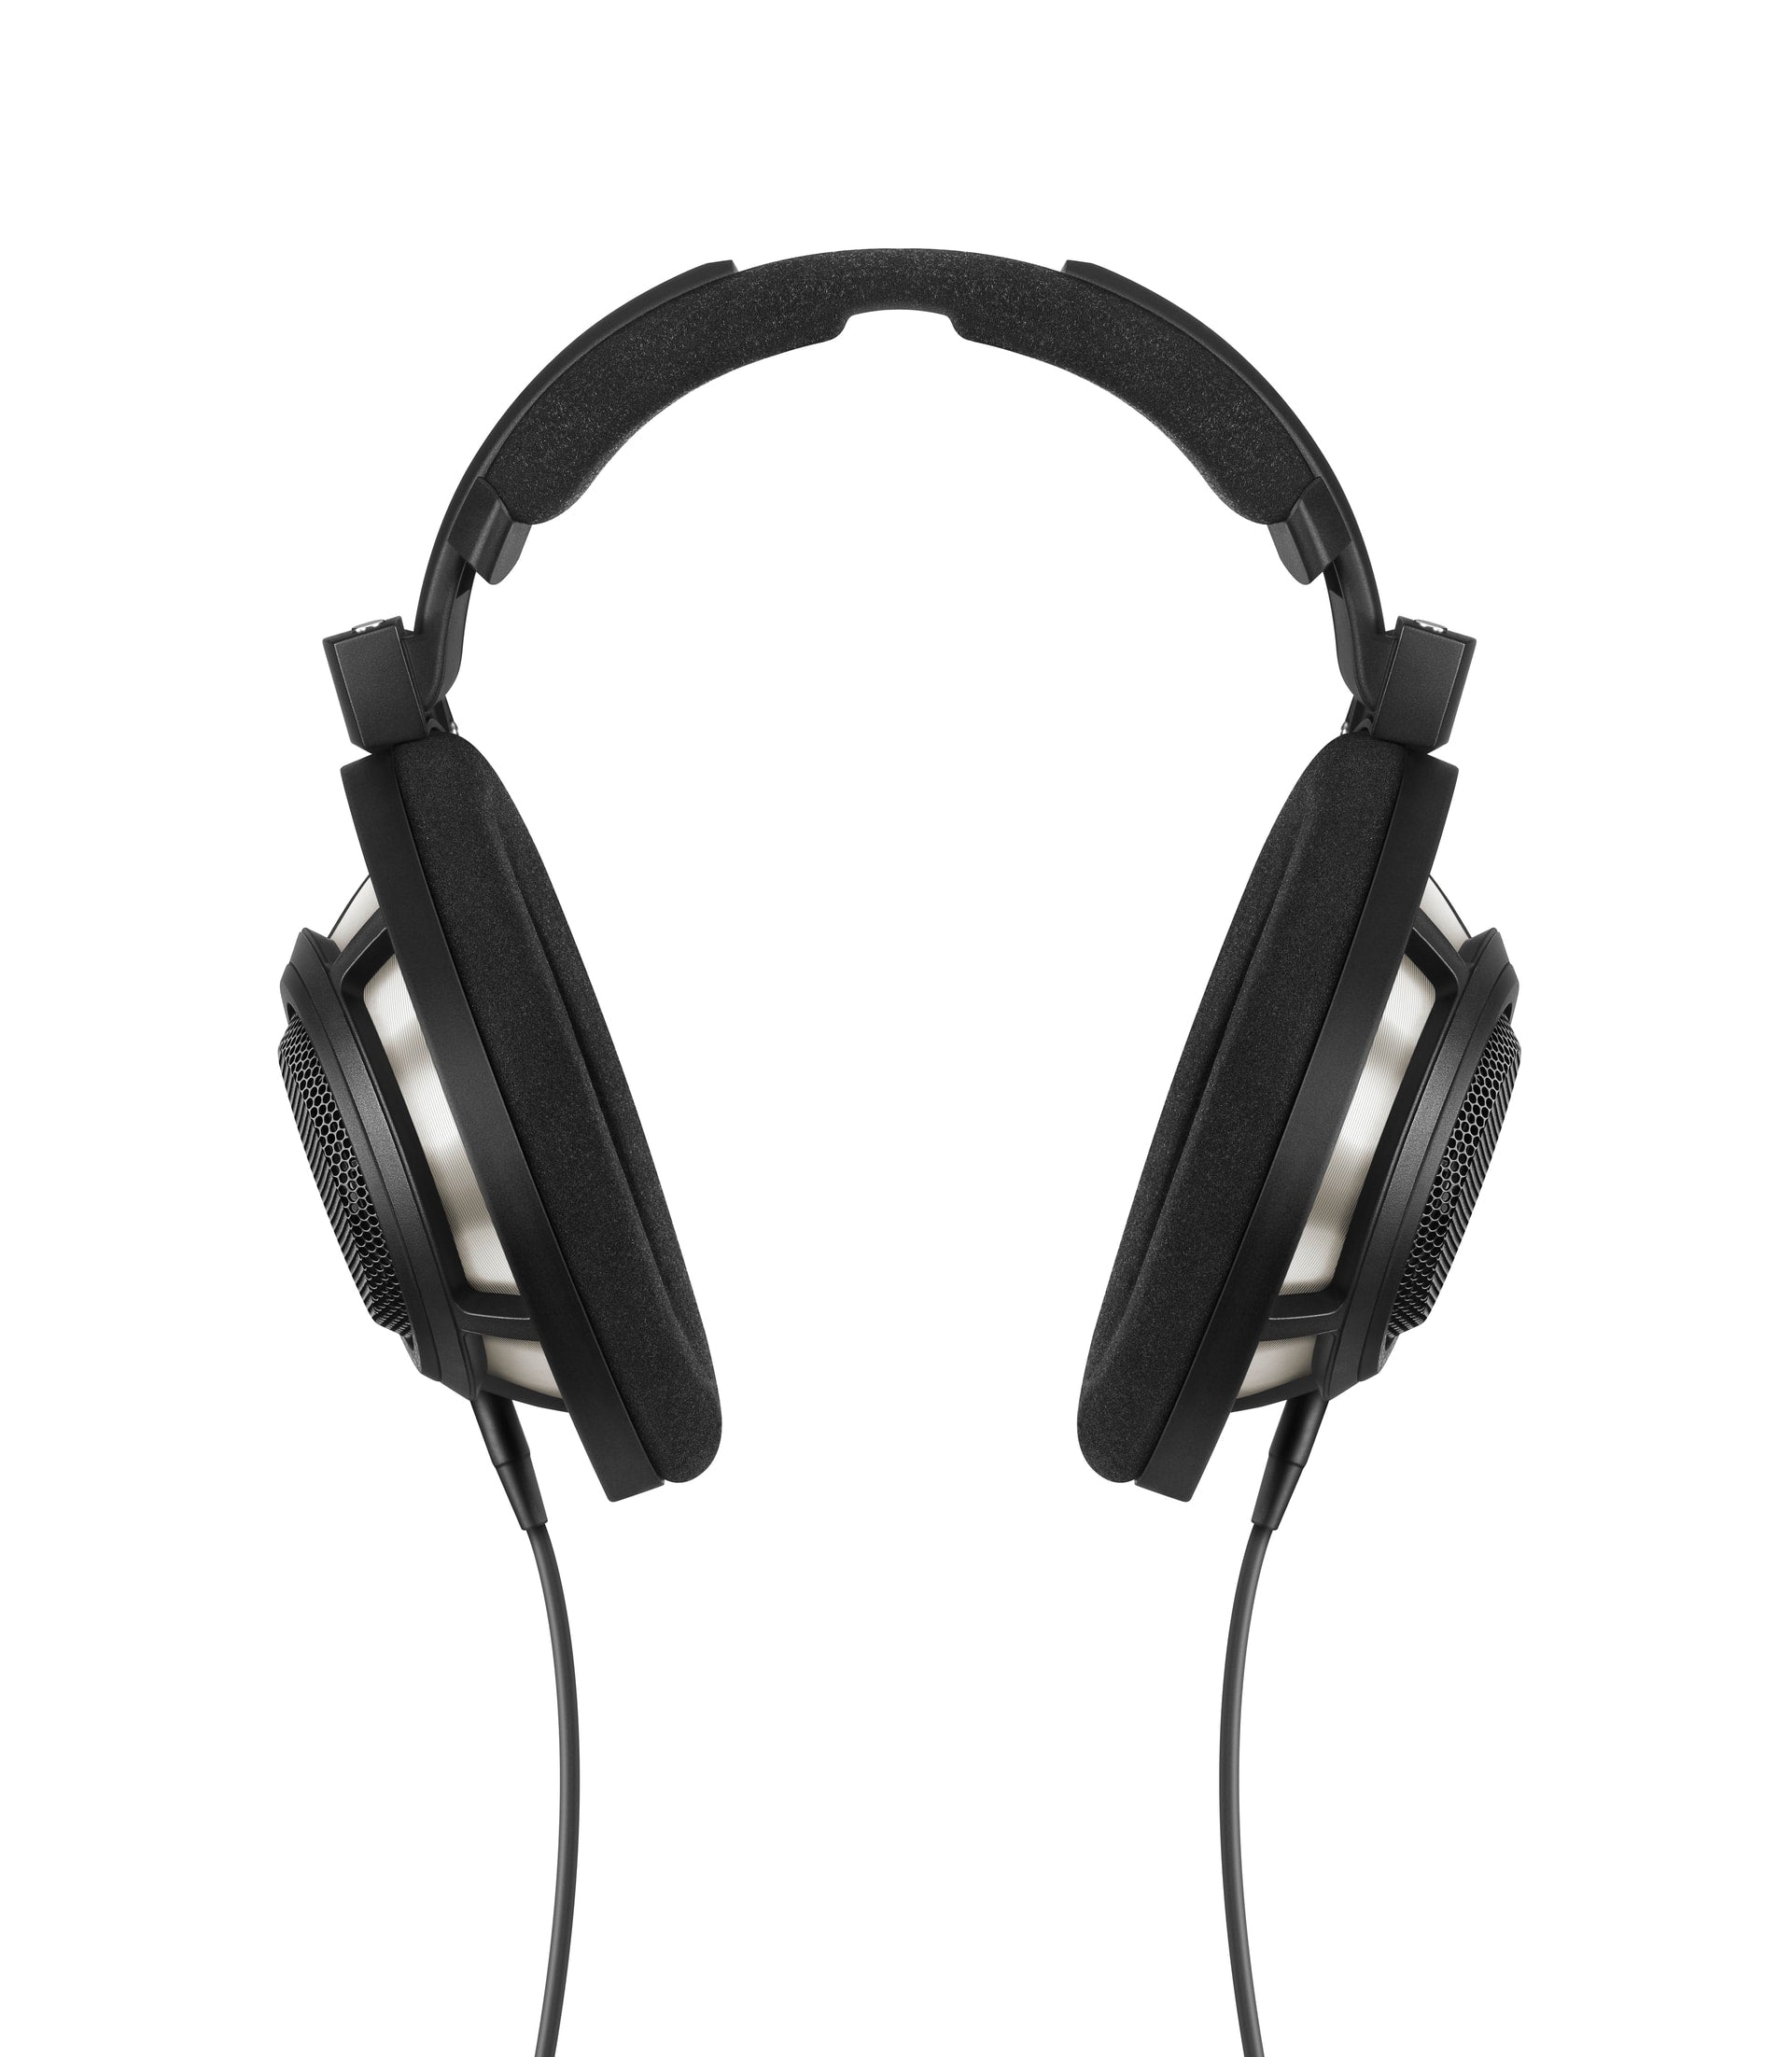 Sennheiser HD 800 S Headphones